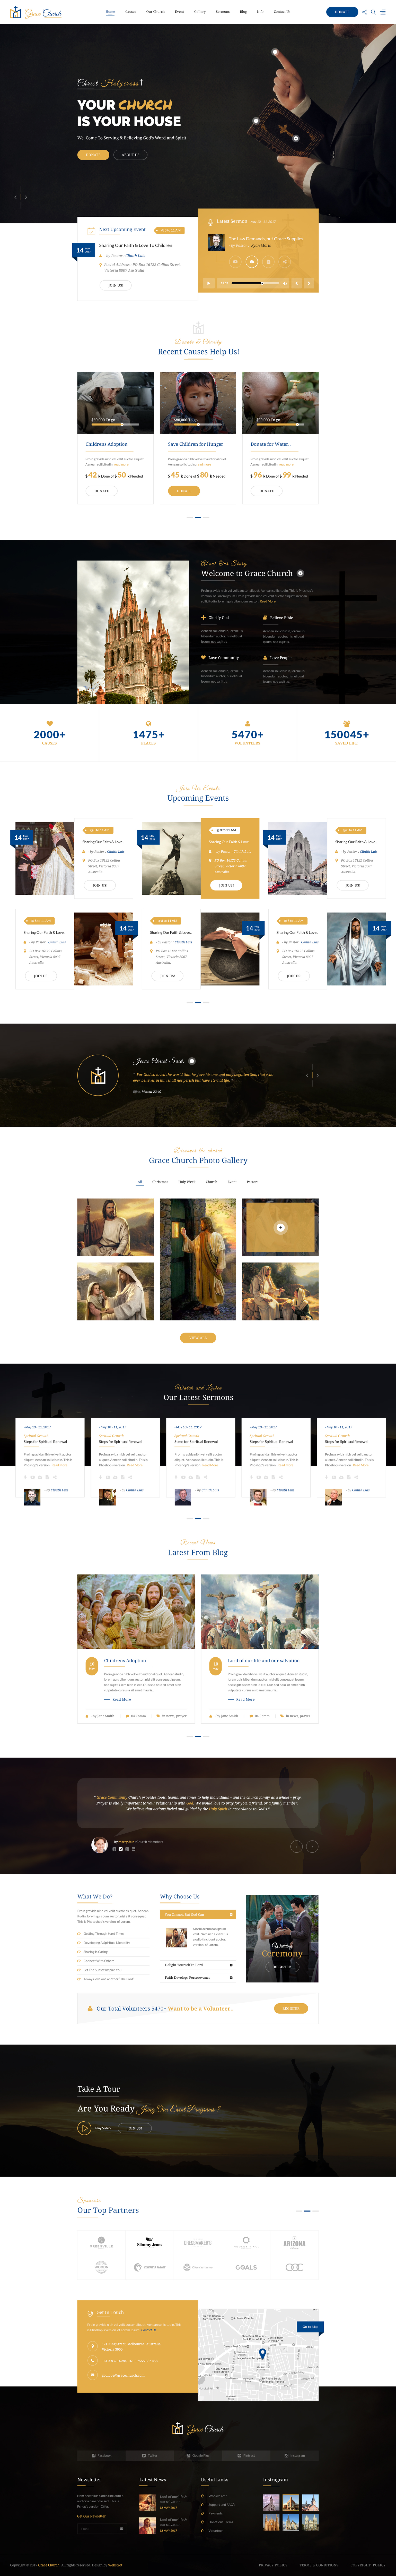 Grace Church - Charity & Church Bootstrap HTMLTemplate 